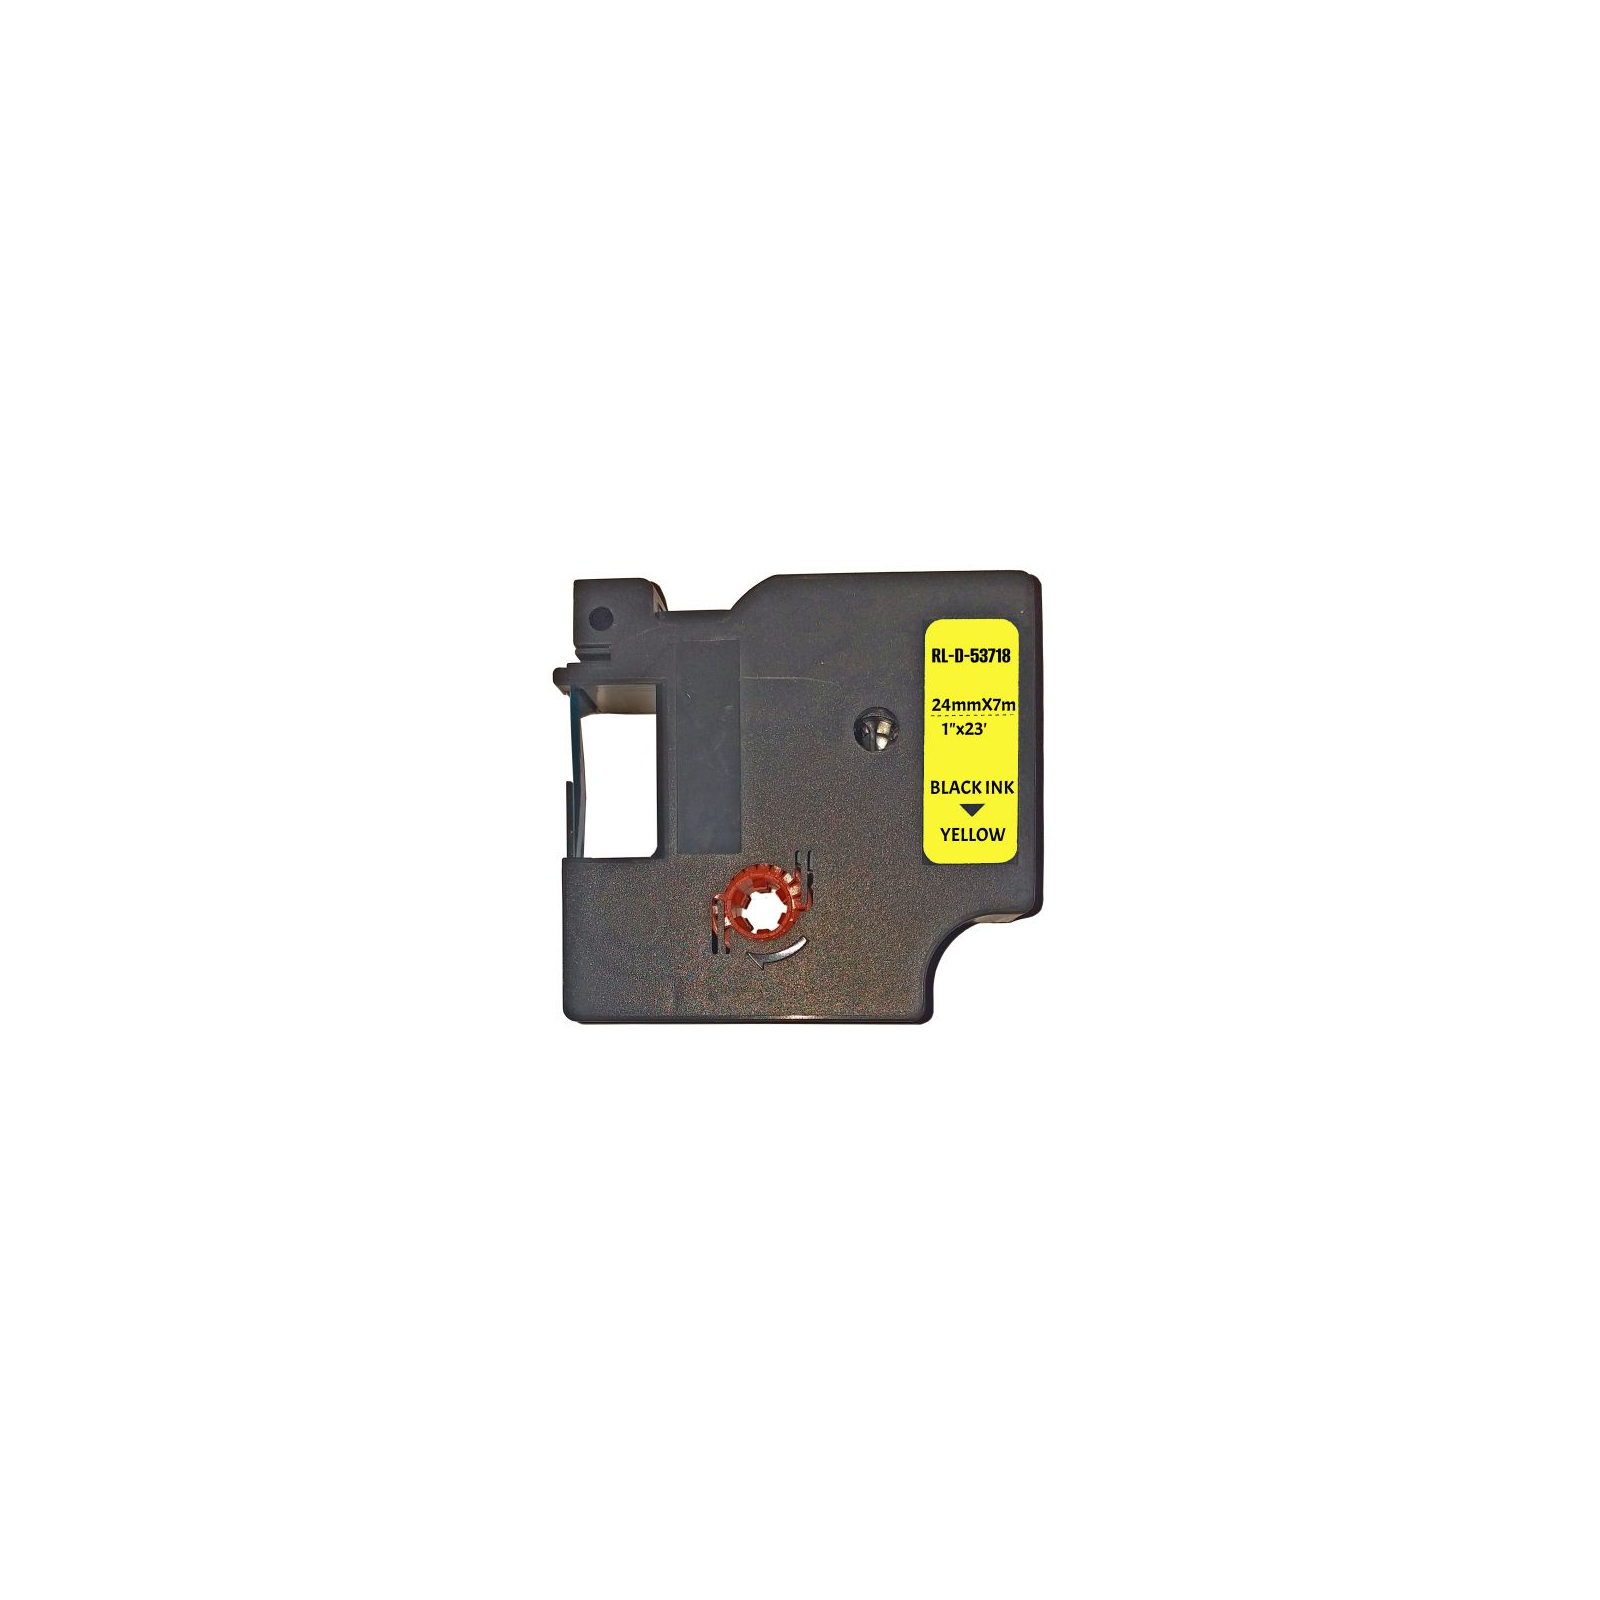 Стрічка для принтера етикеток UKRMARK D-53718P-BK/YE, сумісна з DYMO 53718/S0720980, для серії D1. 24мм х 7м. black on yellow (D-53718P-BK/YE)